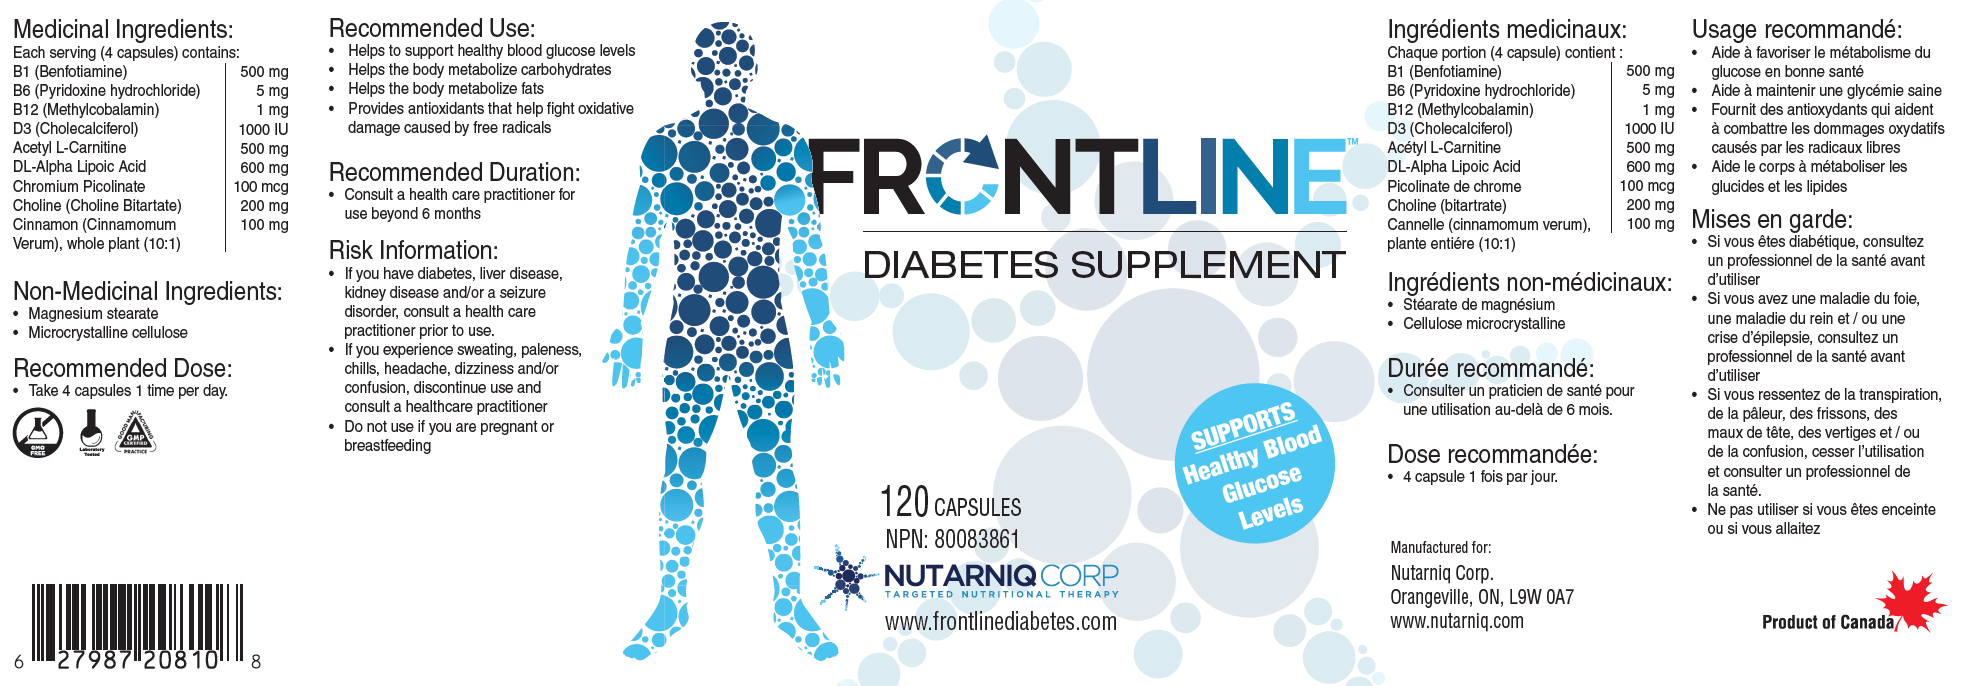 Frontline Diabetes Label